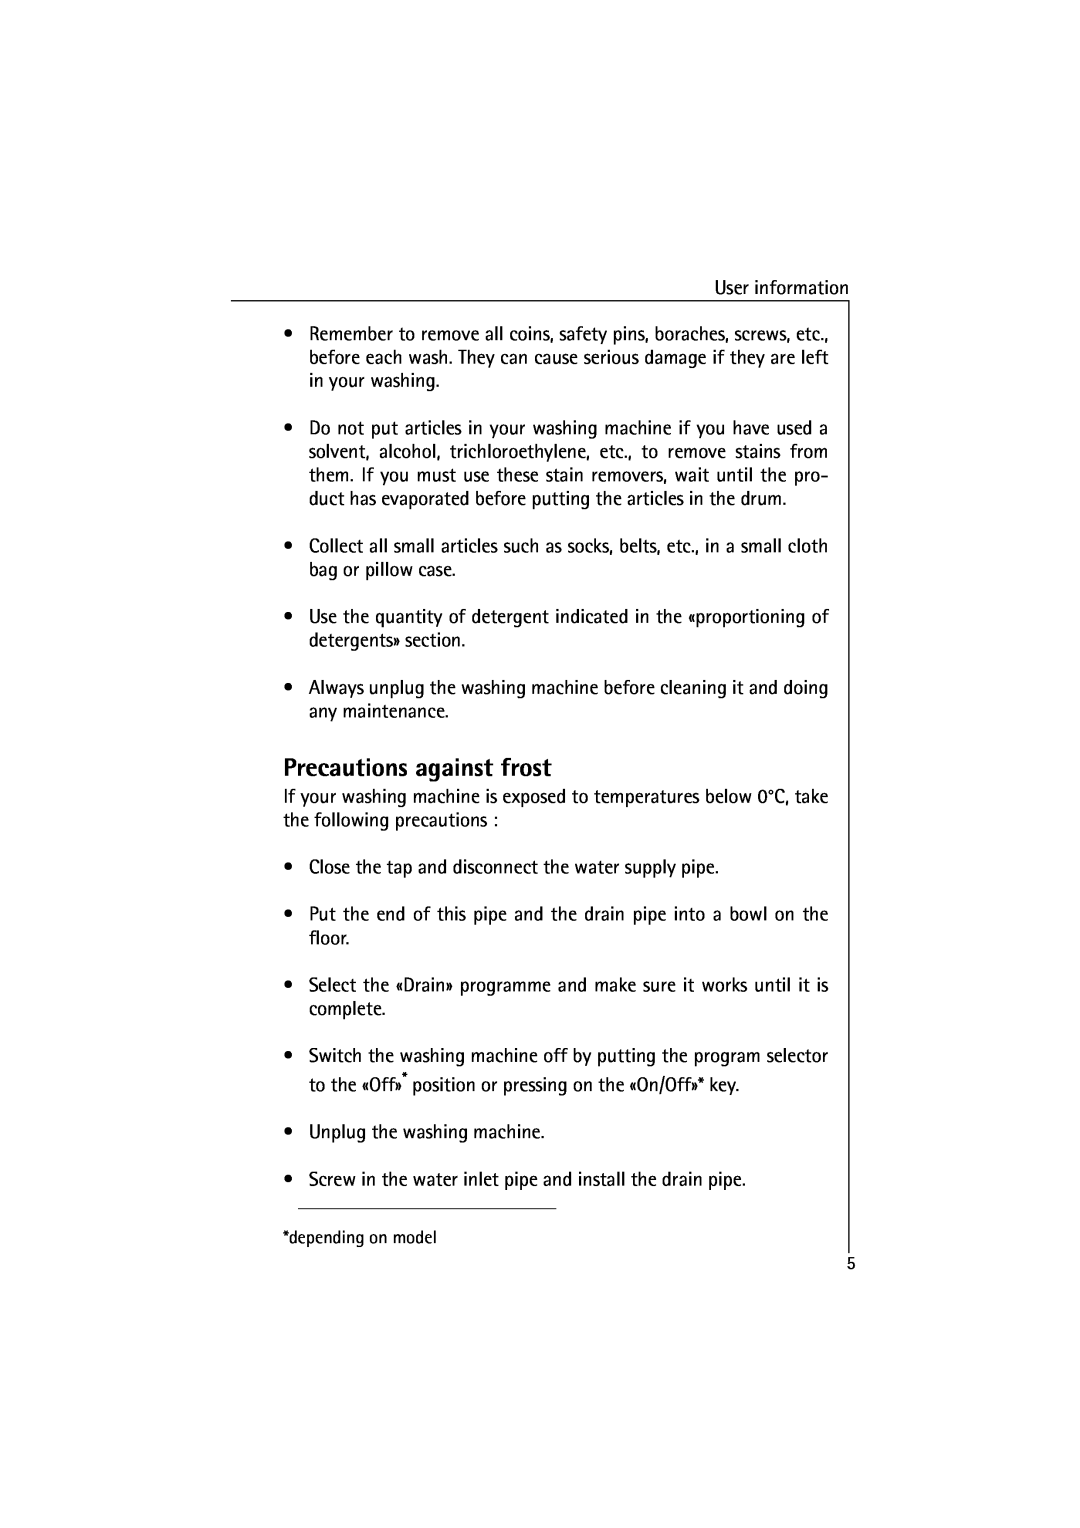 AEG 48380 manual Precautions against frost 